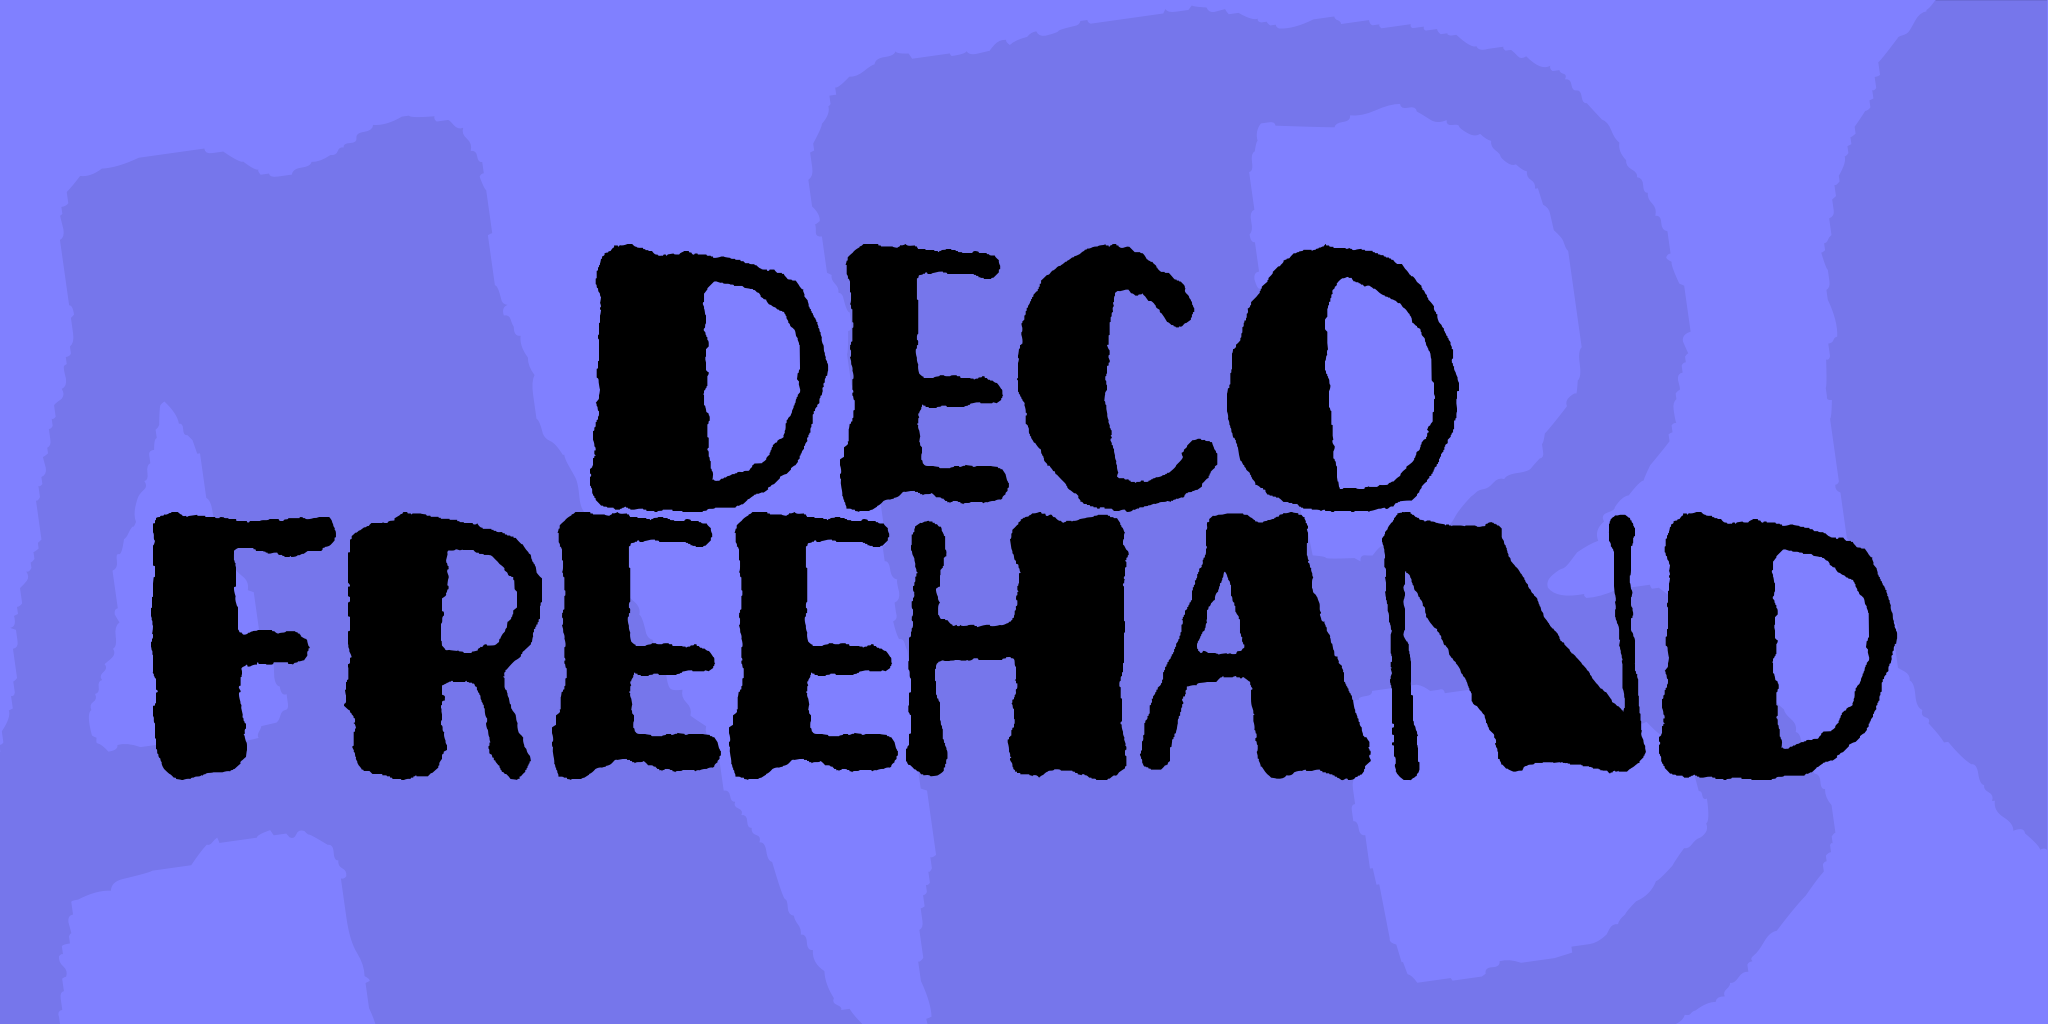 Deco Freehand